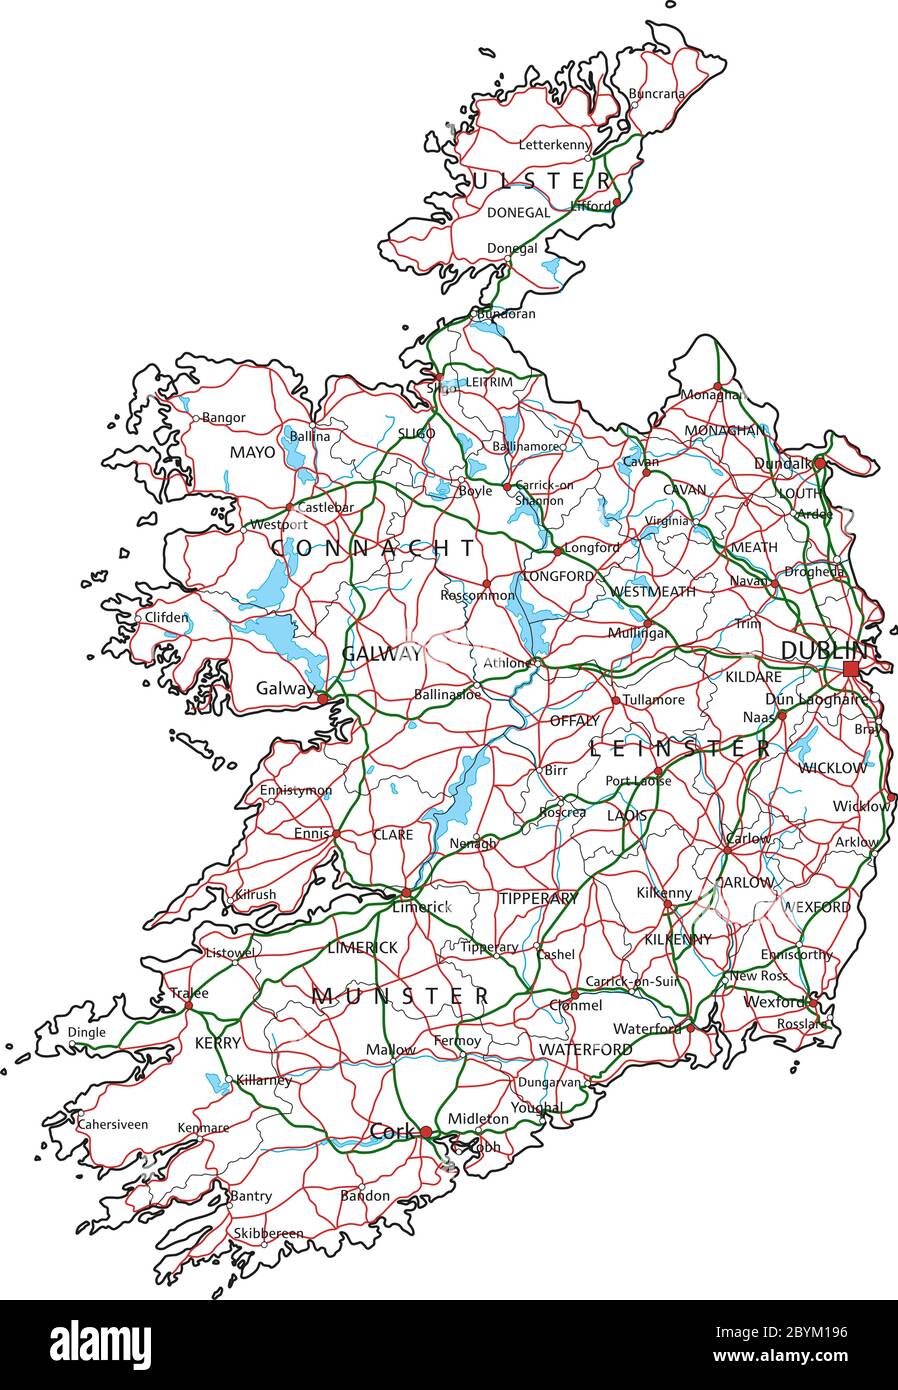 Irland Straßen- und Autobahnkarte. Vektorgrafik. Stock Vektor